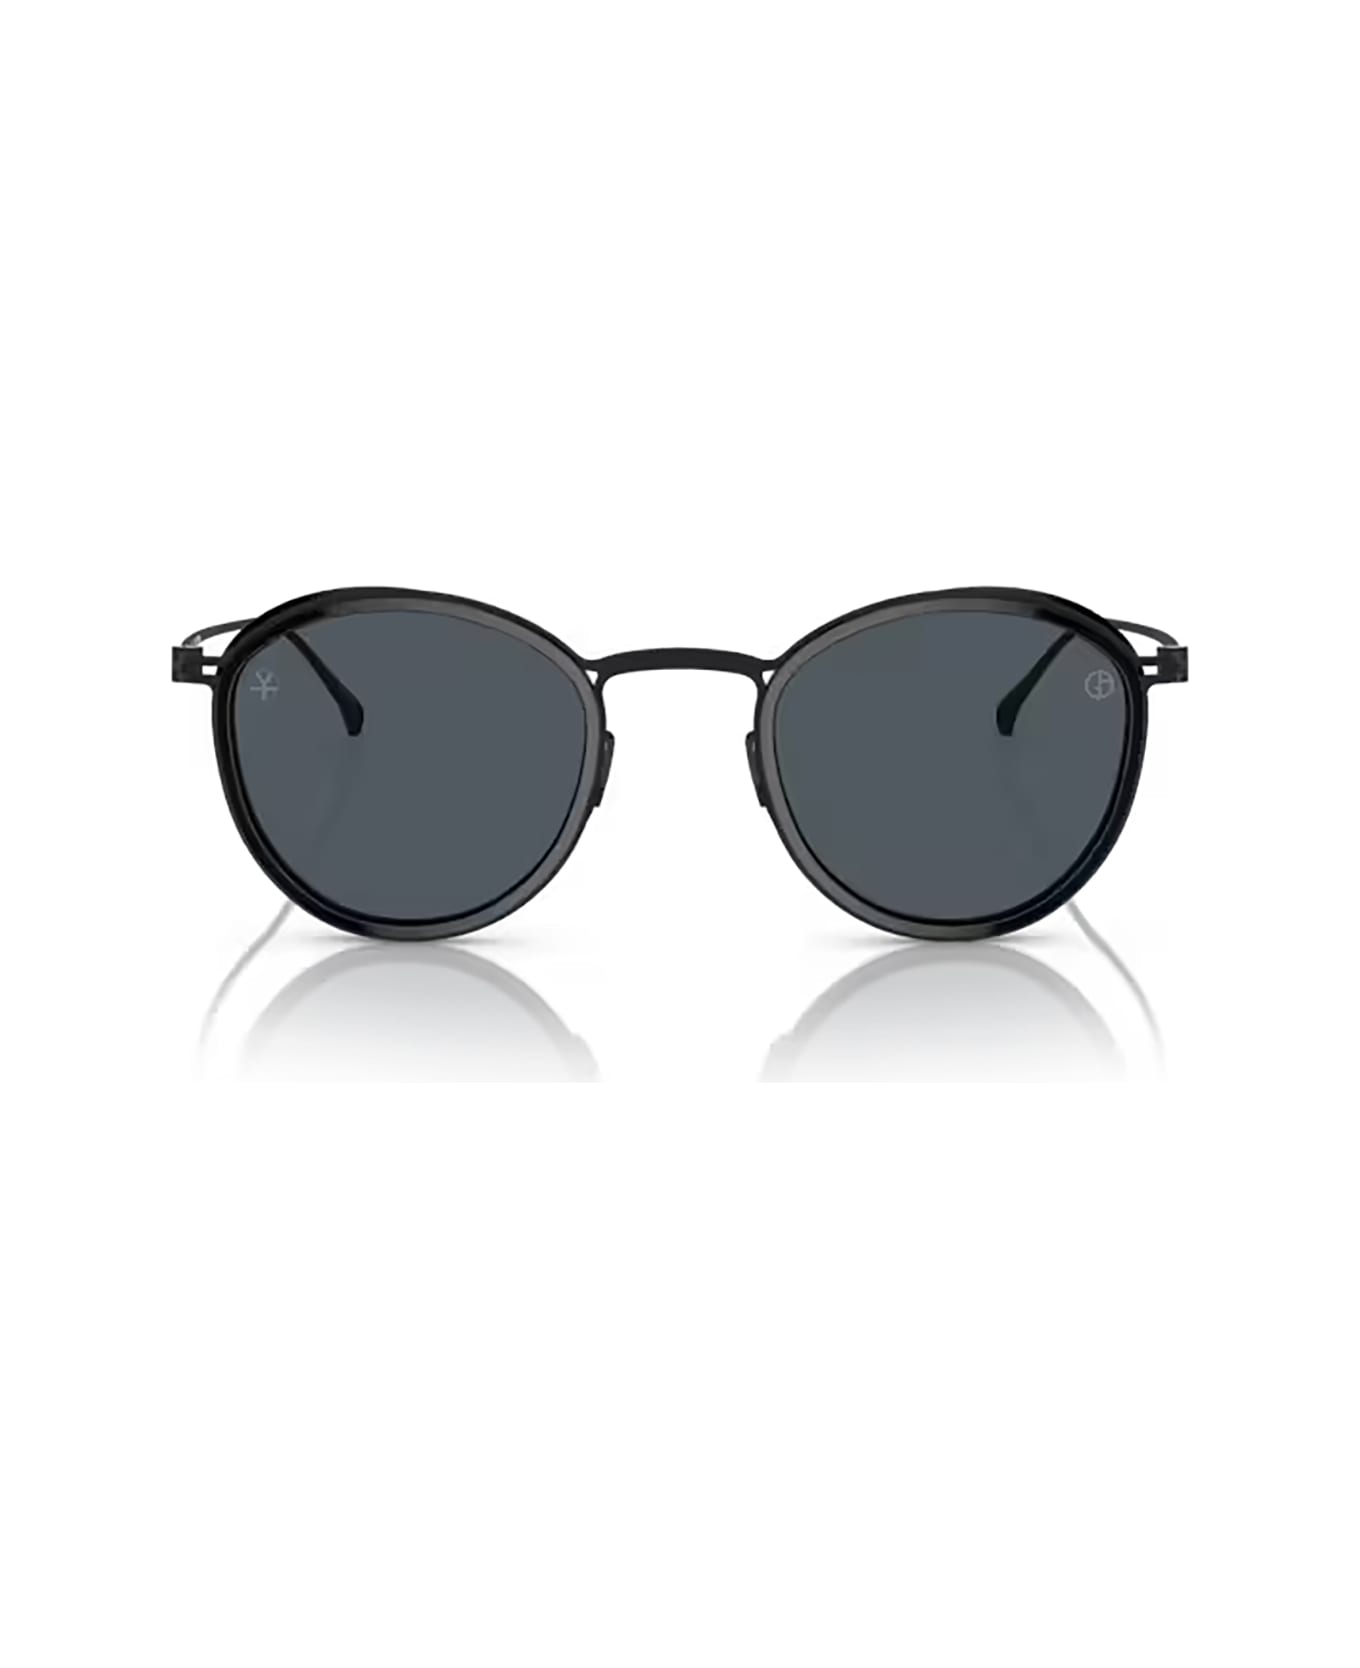 Giorgio Armani Ar6148t Shiny Black Sunglasses - Shiny Black